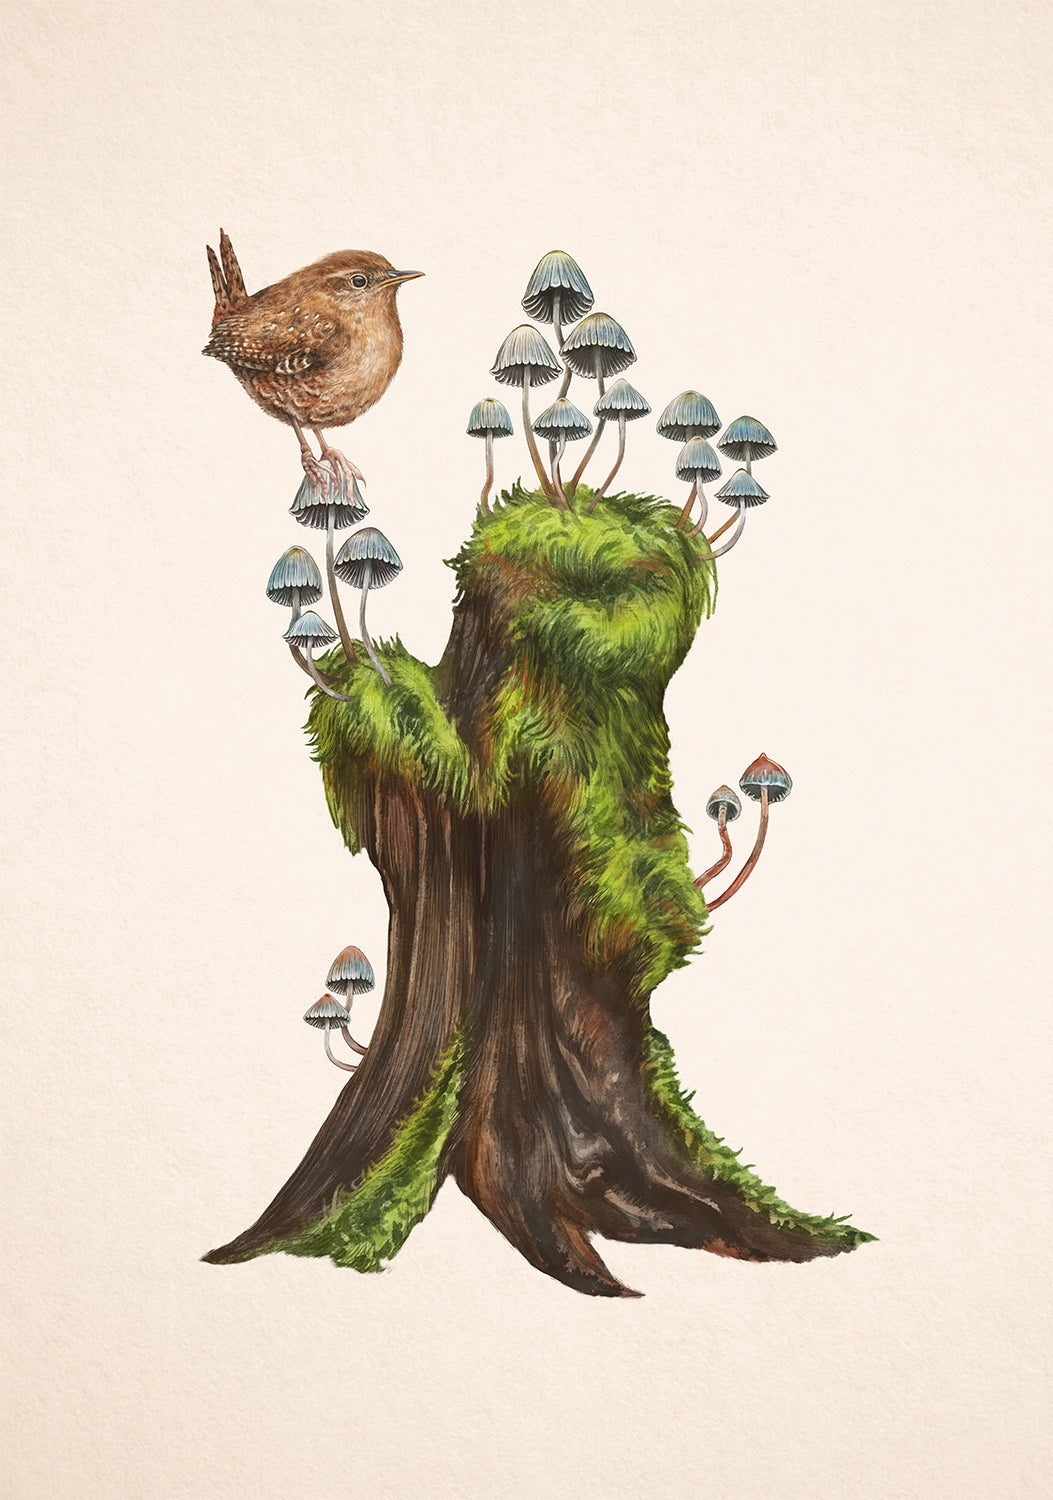 Fairy Inkcap Stump with Wren